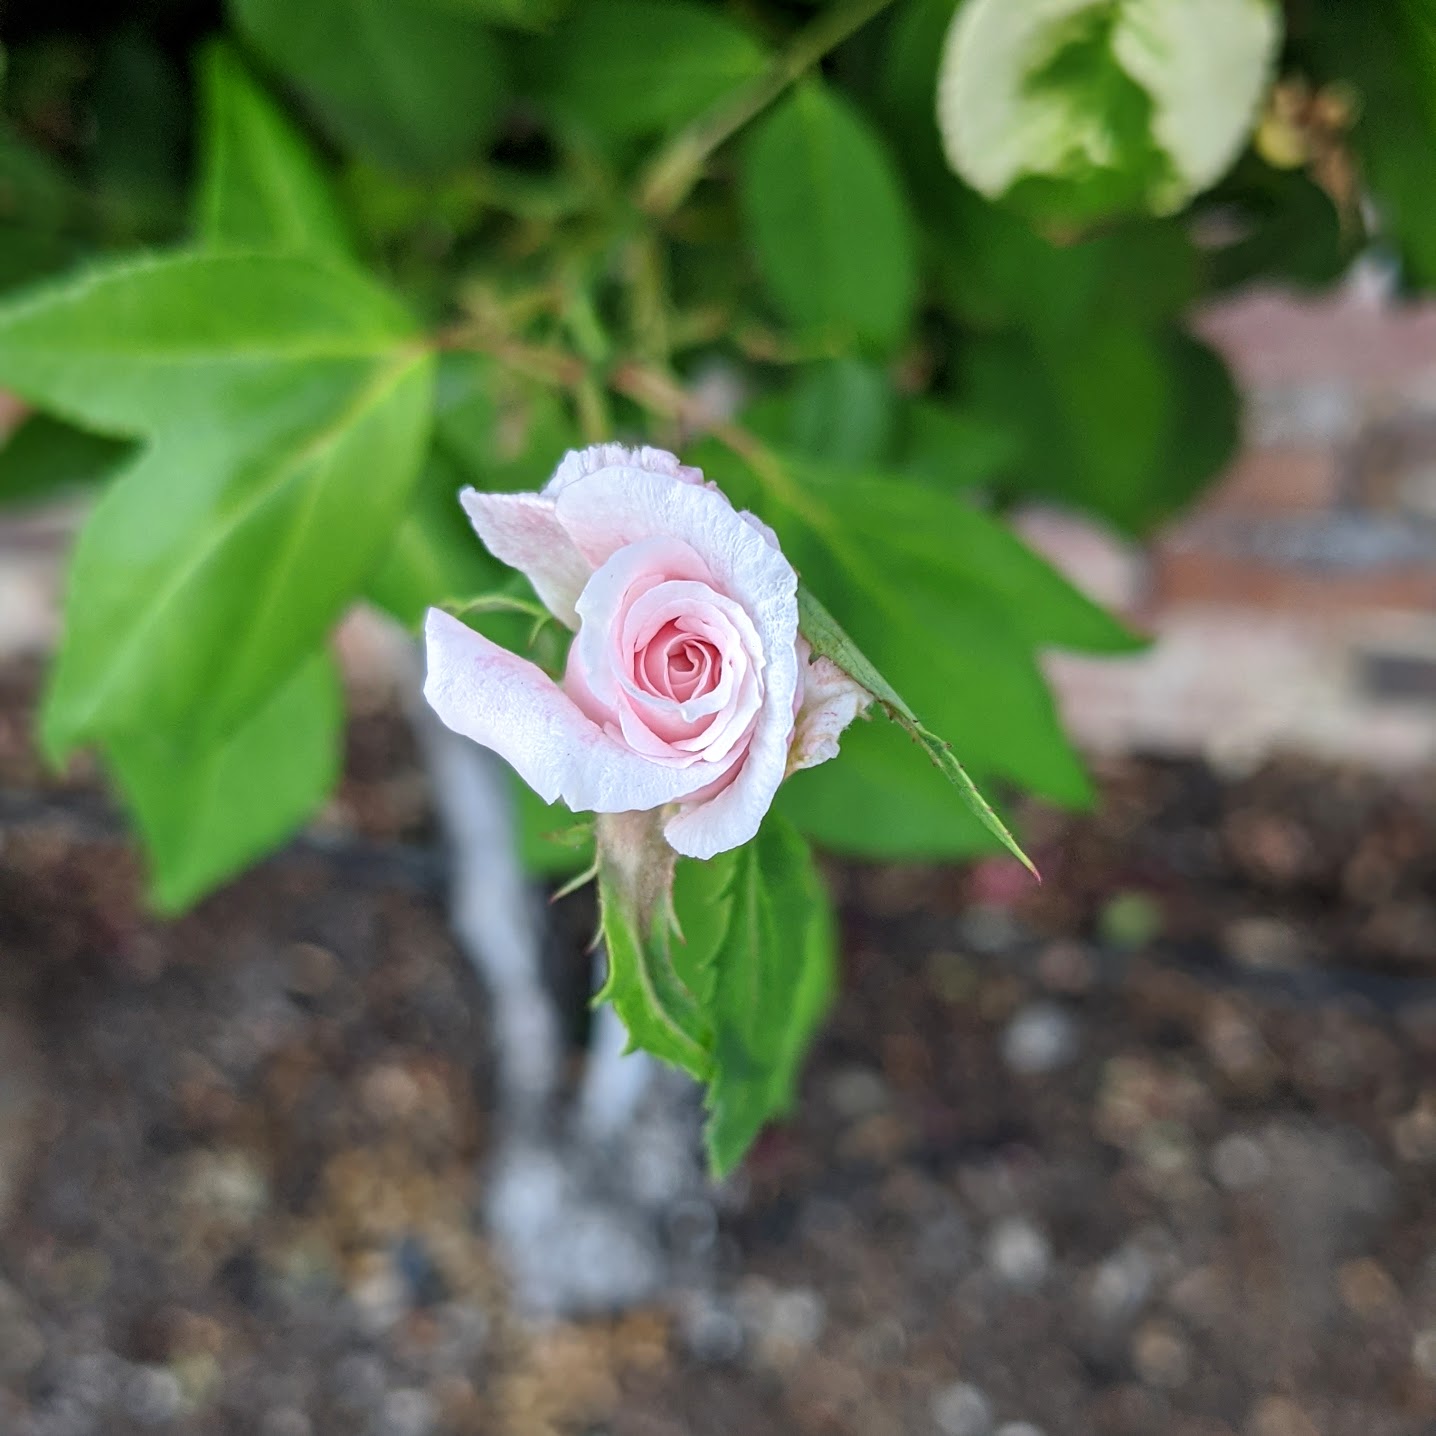 tiny rose bud